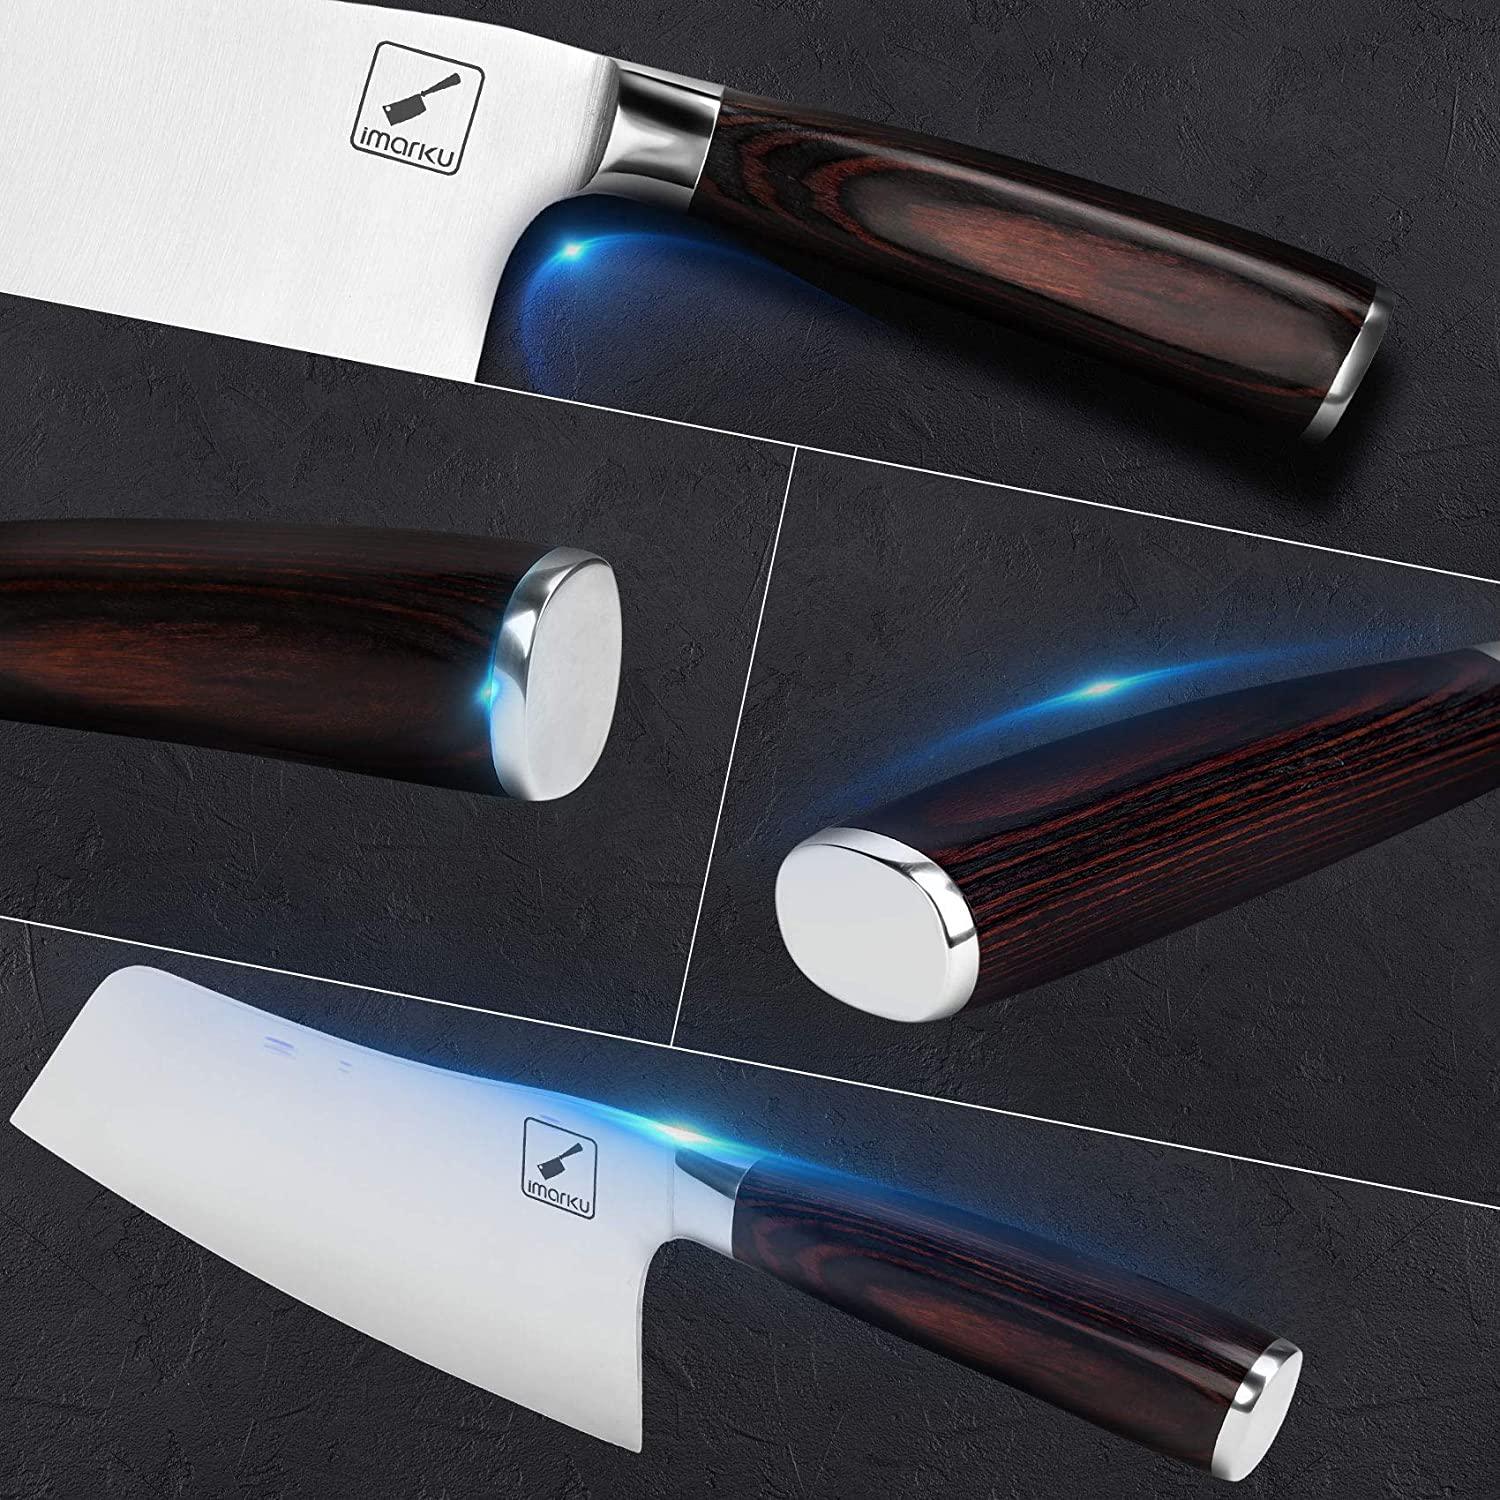 Box Cutters - Finger-Friendly® Blades